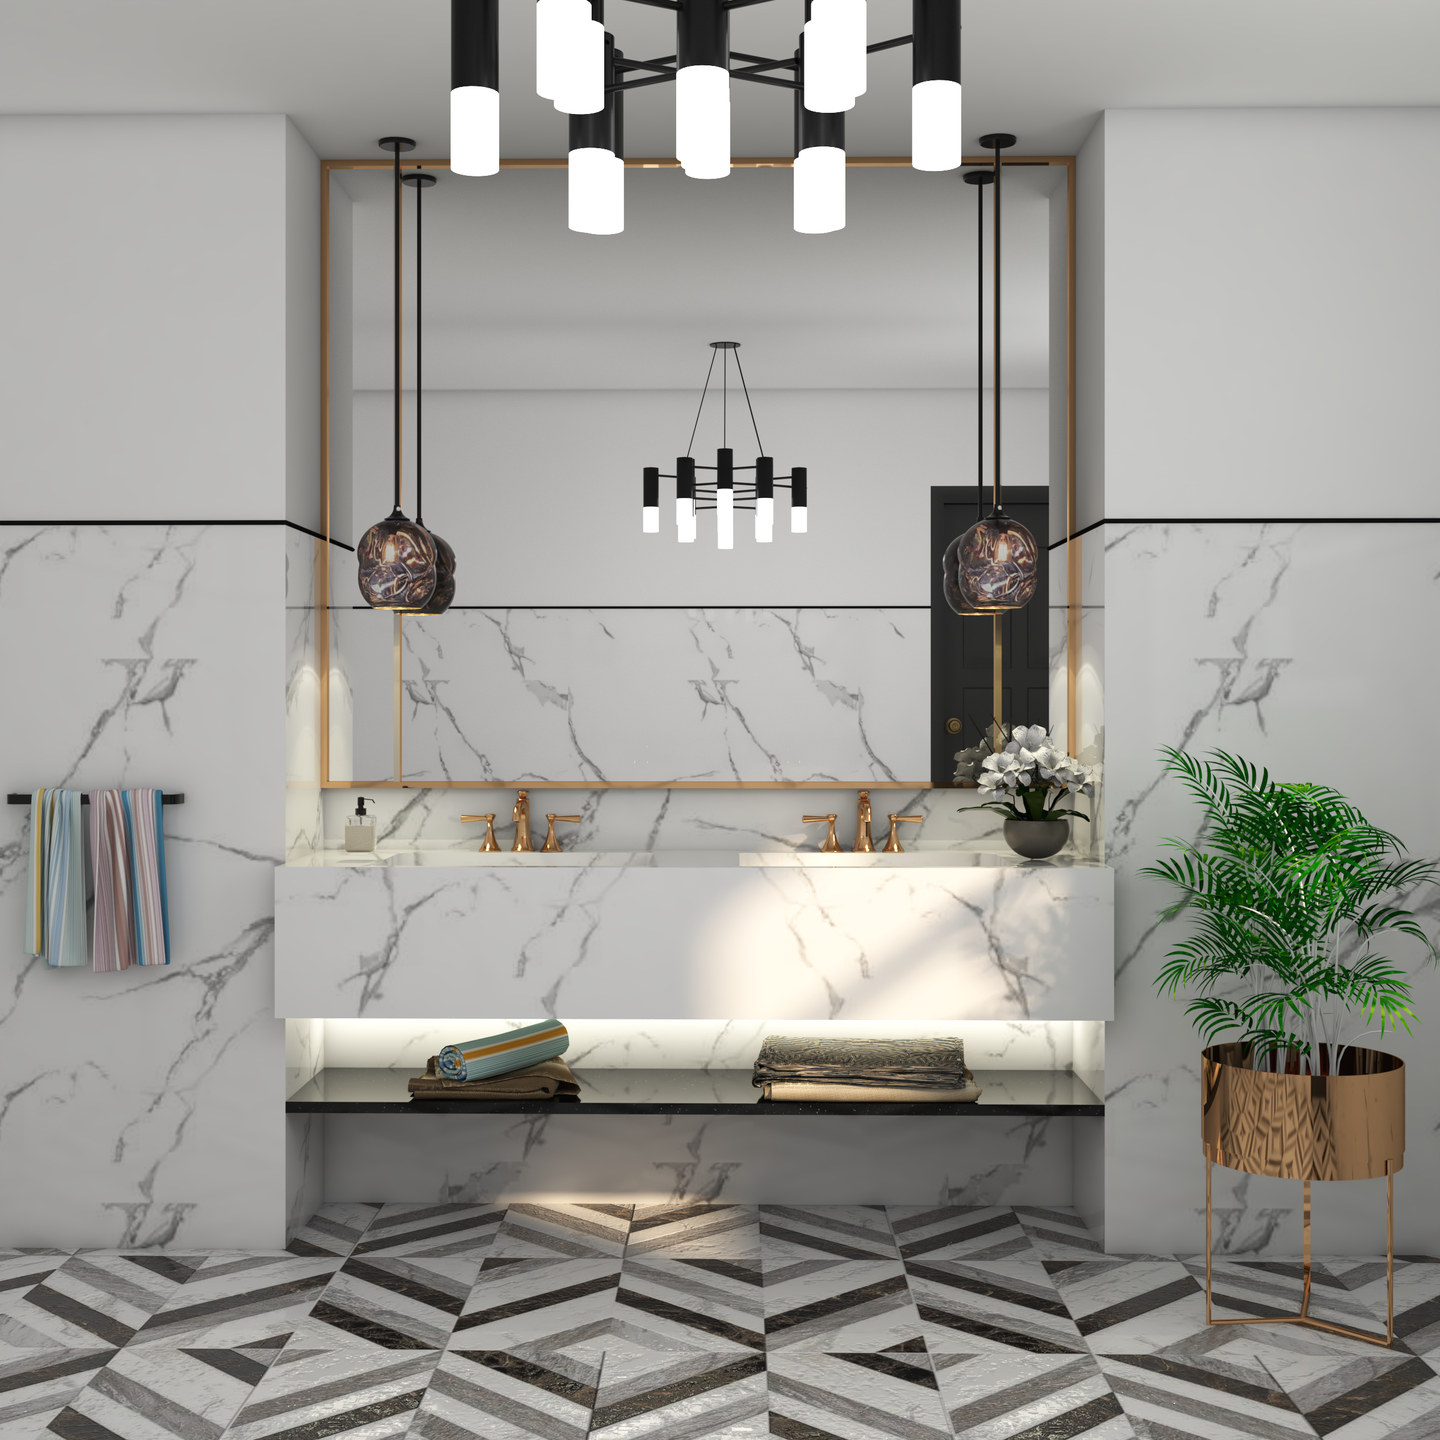 Abstract Bathroom Tile Design - Livspace